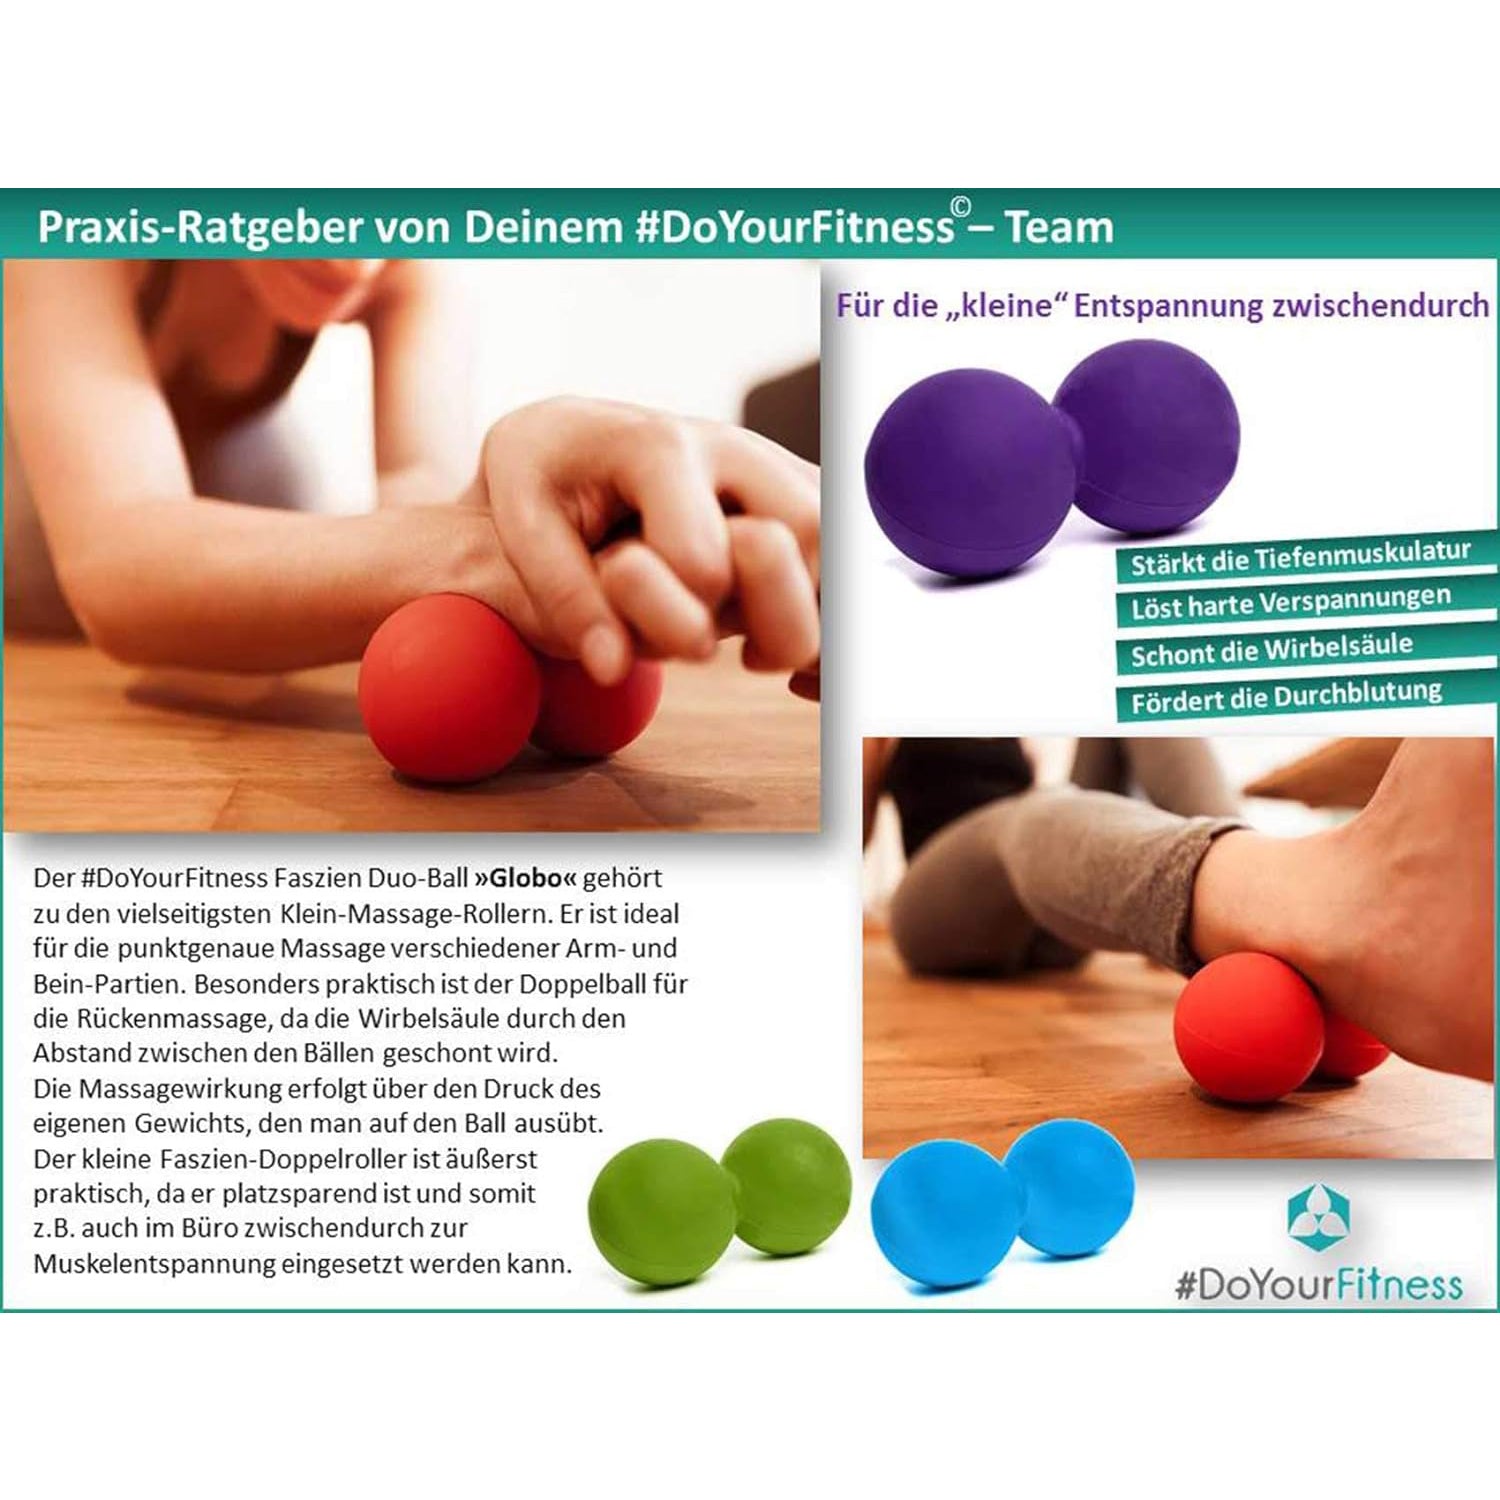 Double Faszienball -  Massageball Globo - ca 8cm Durchmesser aus Silikon - Grün